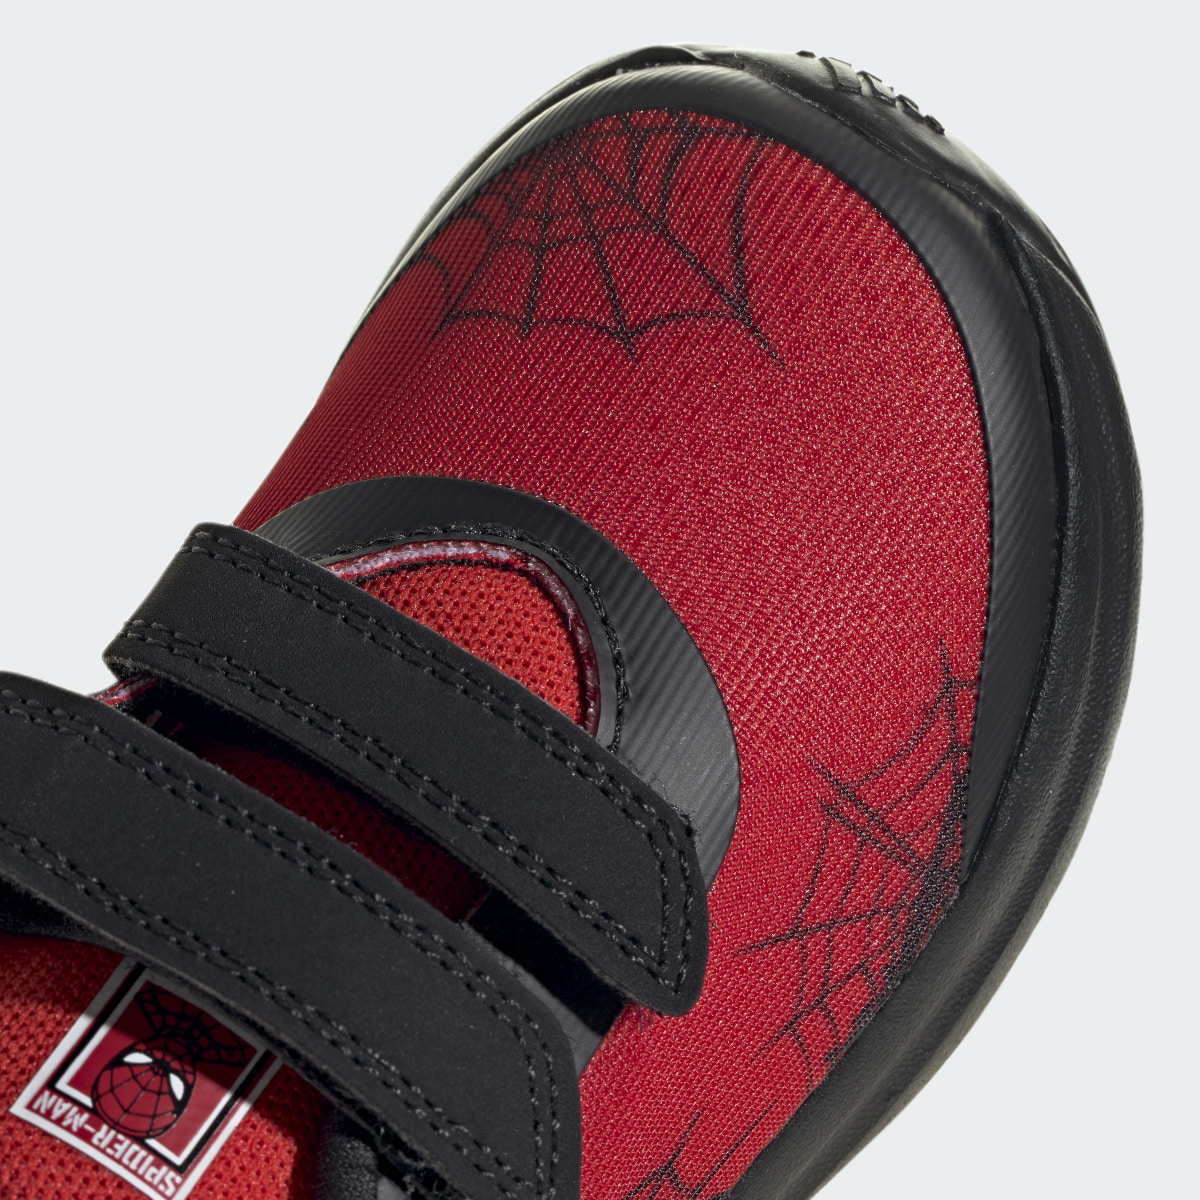 Adidas Sapatilhas Fortarun Spider-Man adidas x Marvel. 9